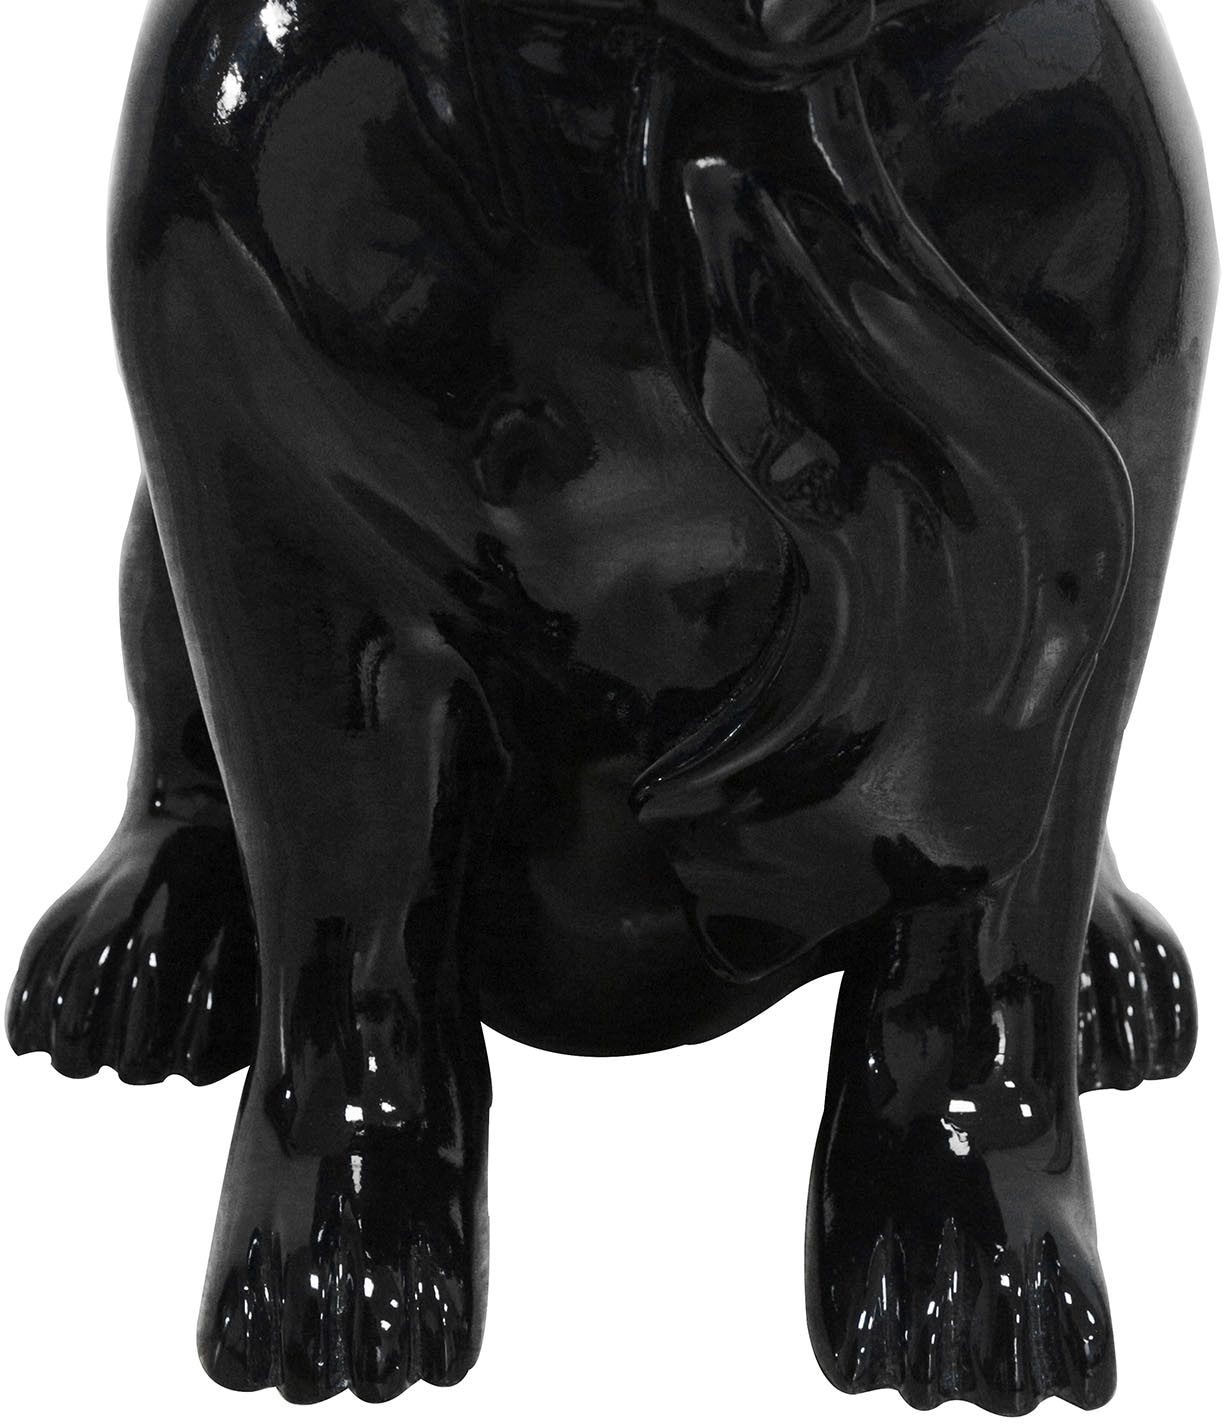 Kayoom Tierfigur »Skulptur Dude 100 Schwarz«